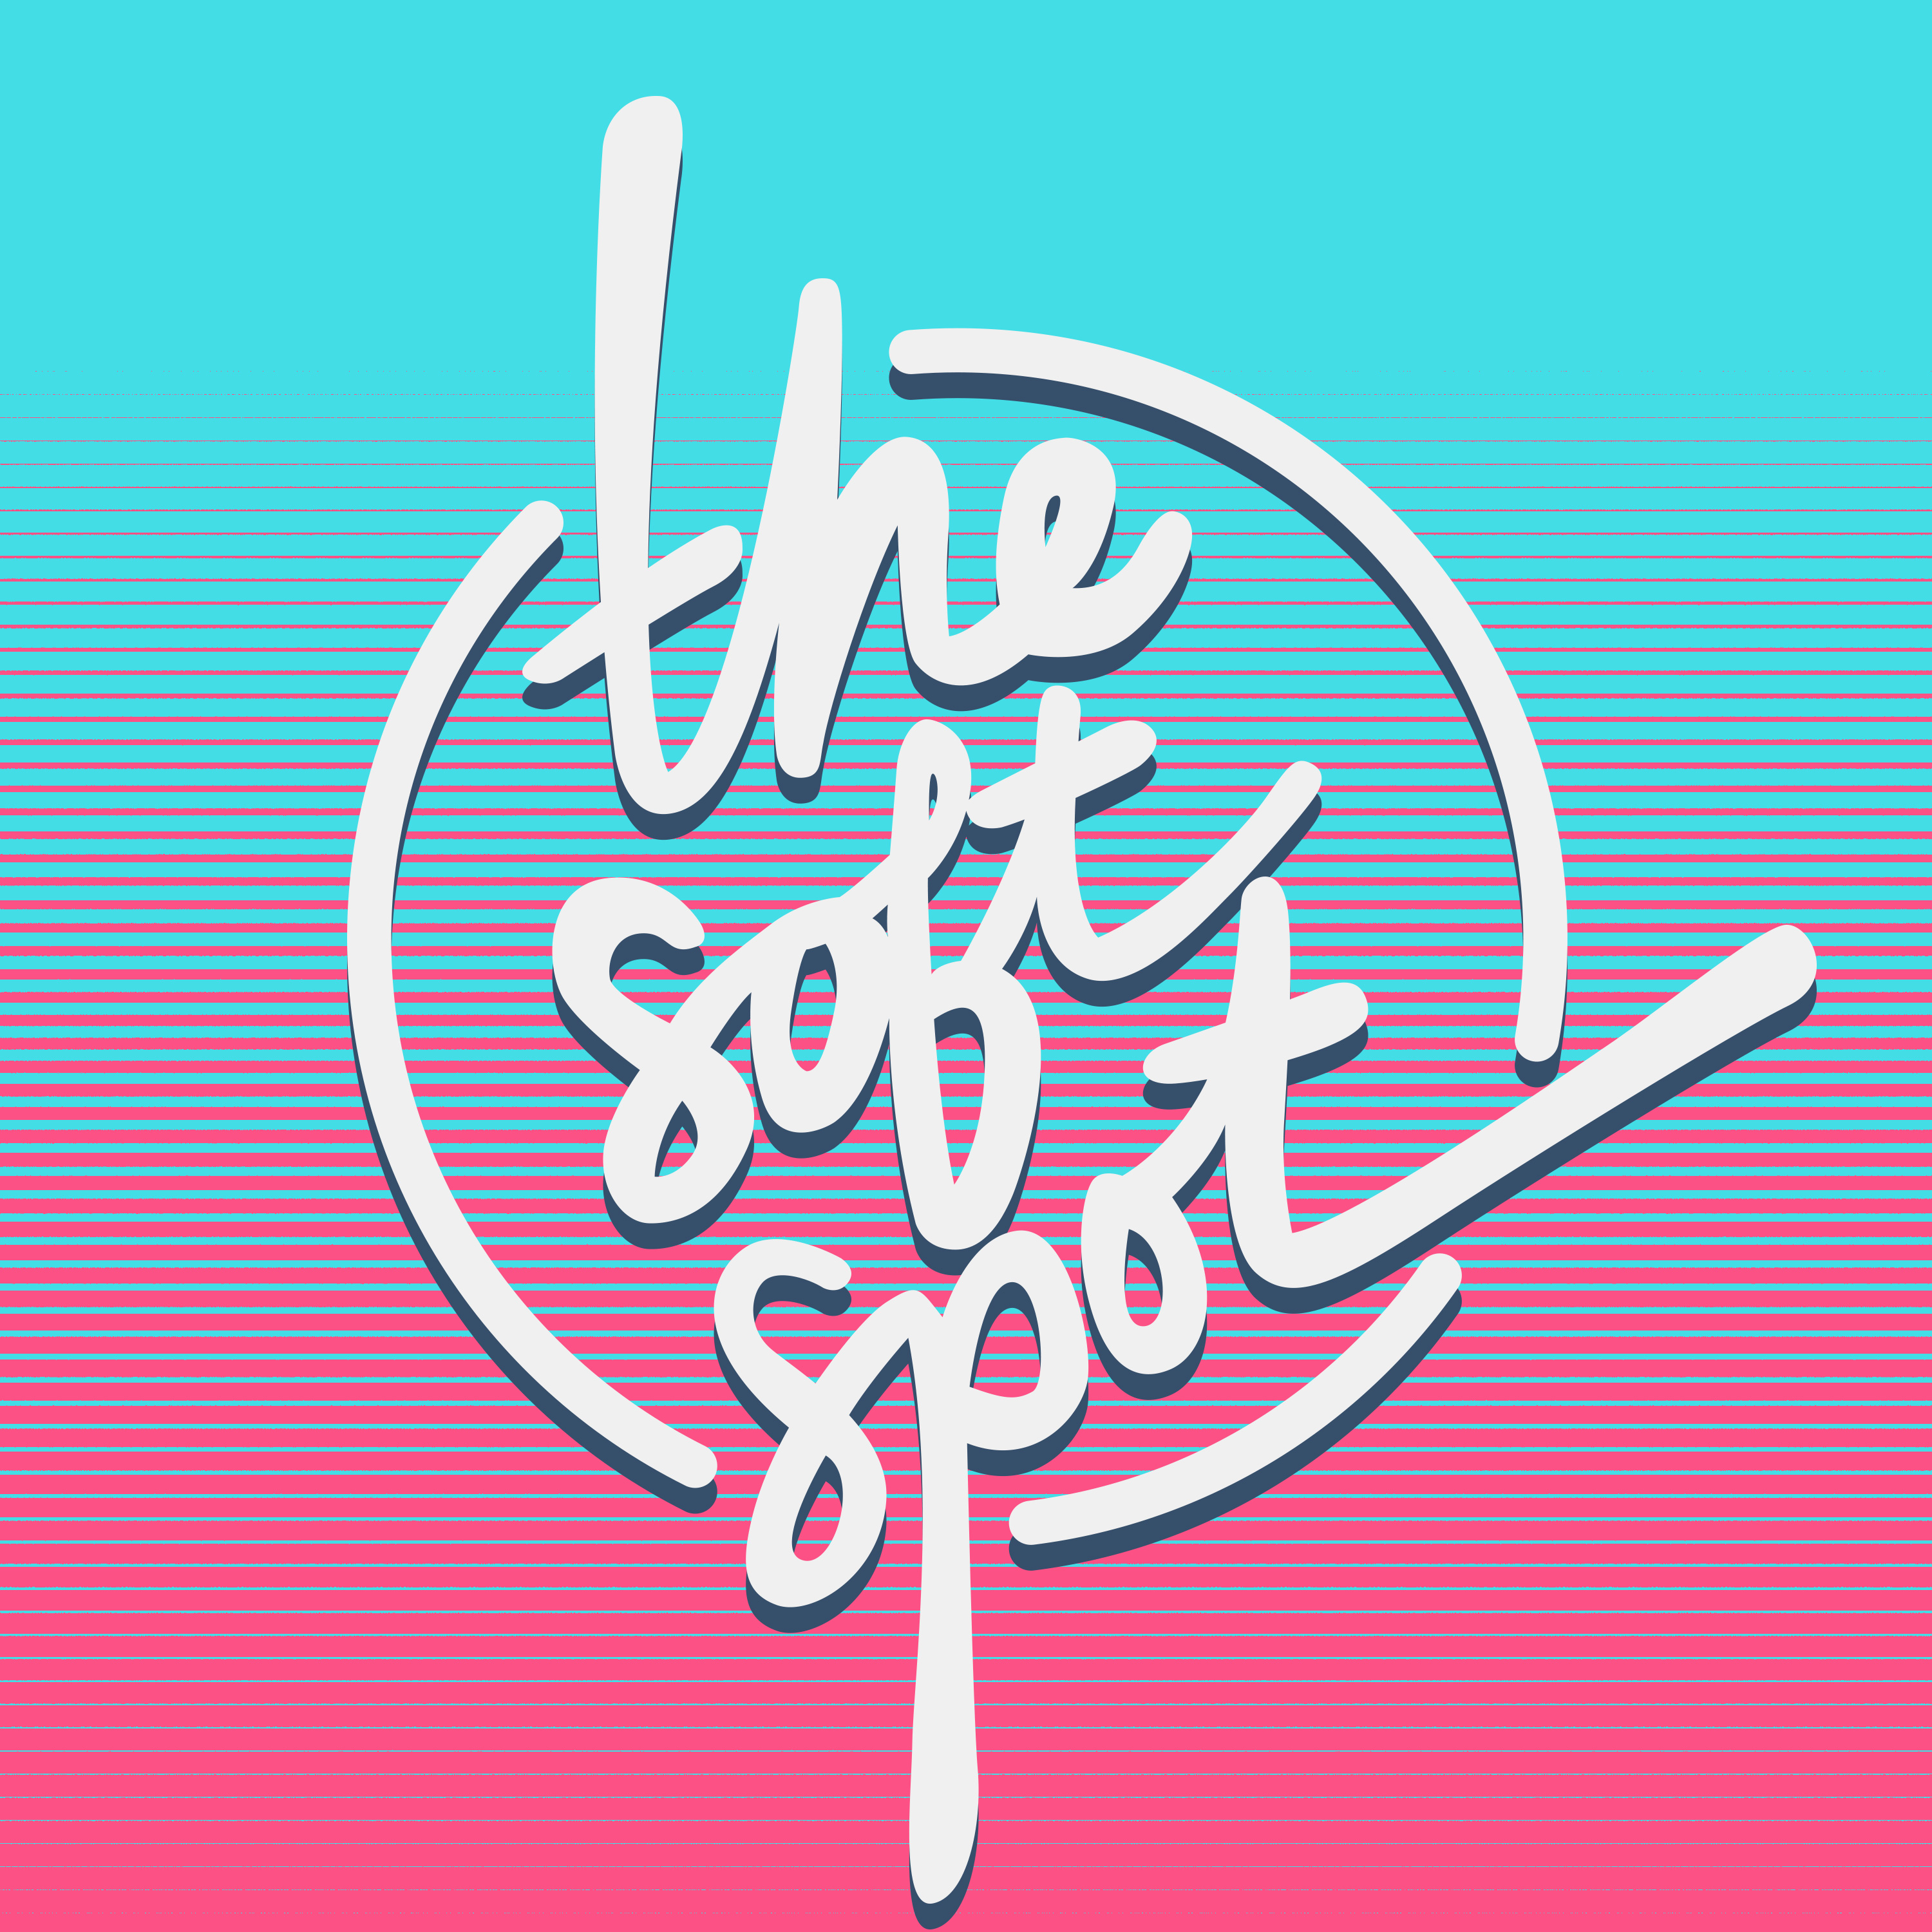 The Soft Spot Podcast Cover - Horizontal